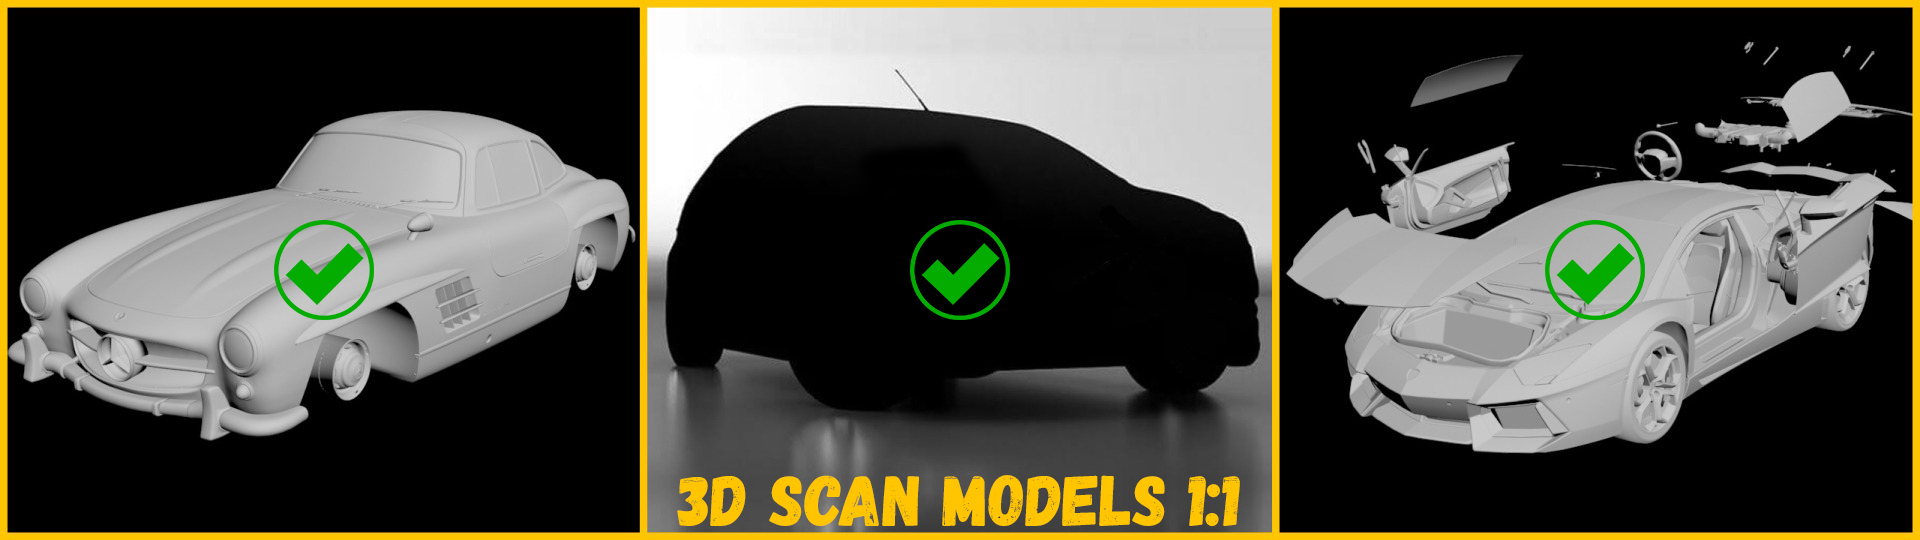 3D scan models